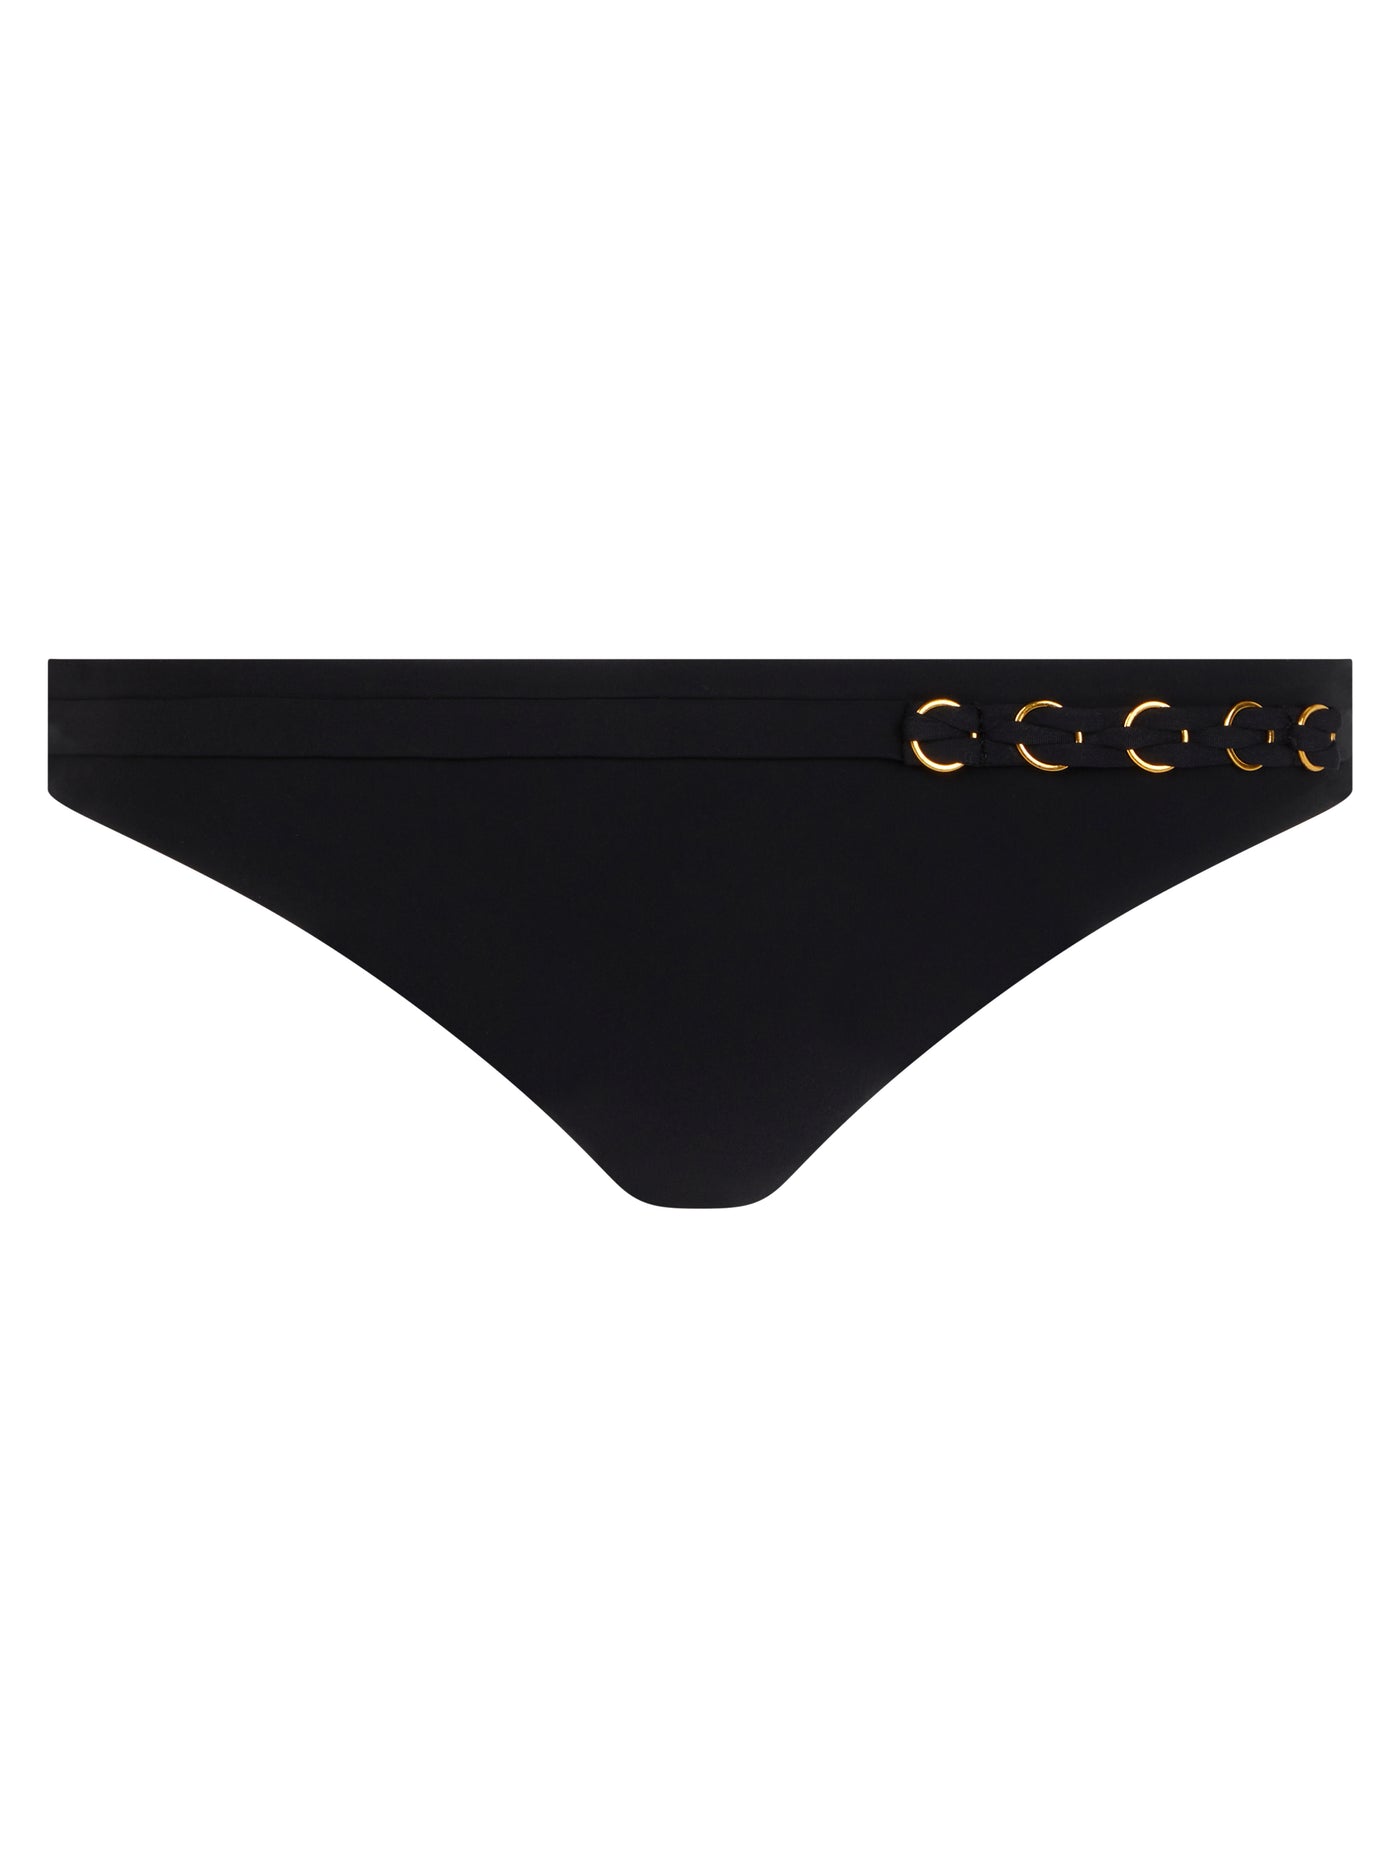 Chantelle Beachwear Emblem Brief Black